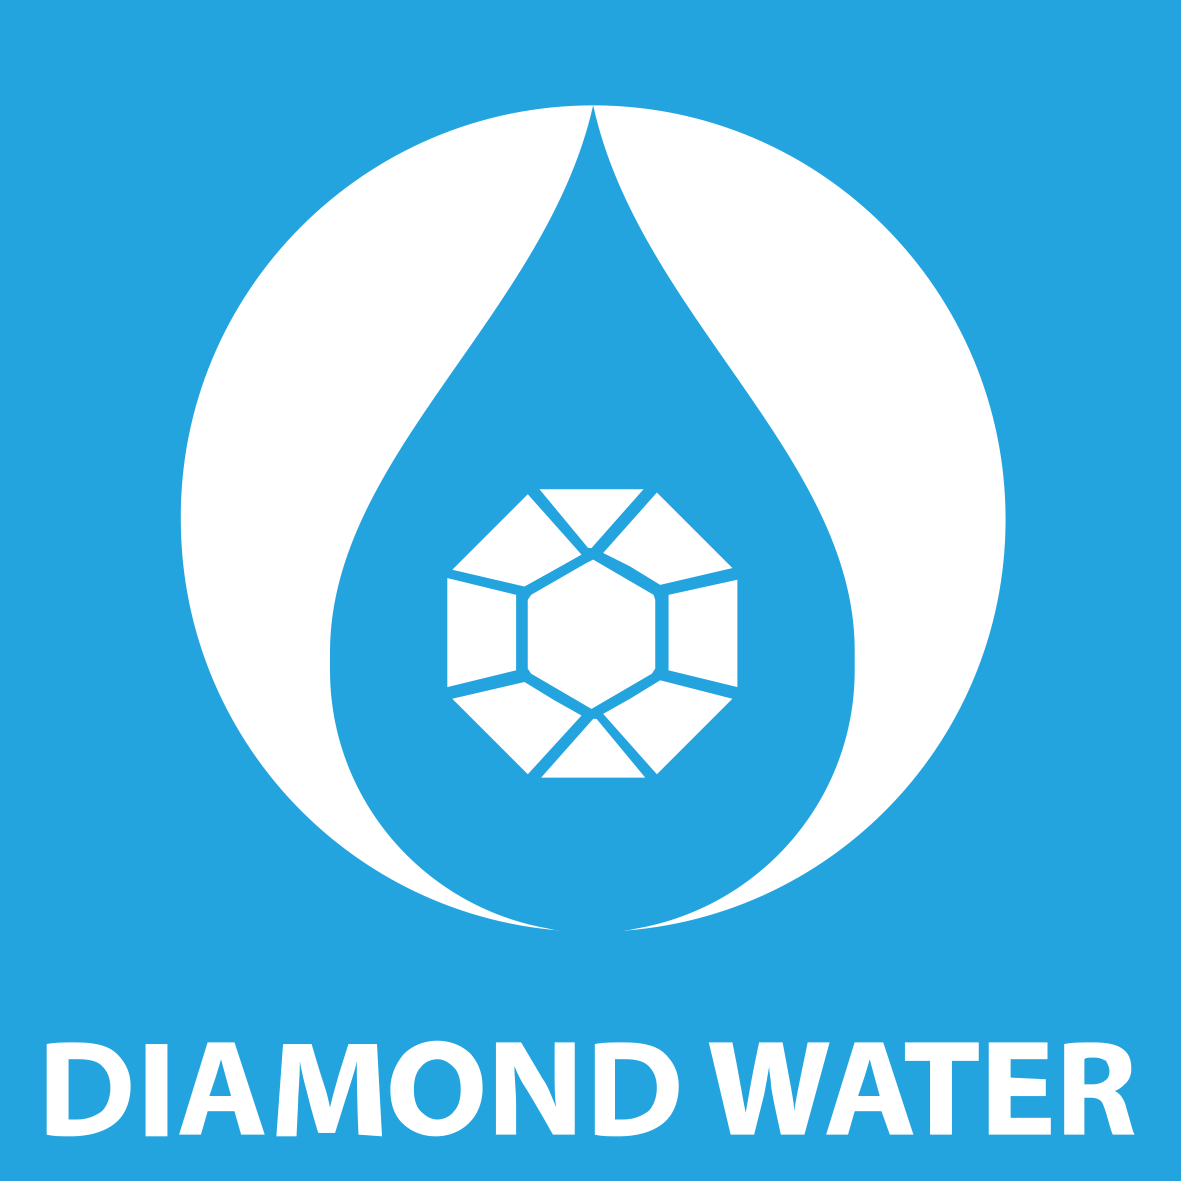 Diamond water